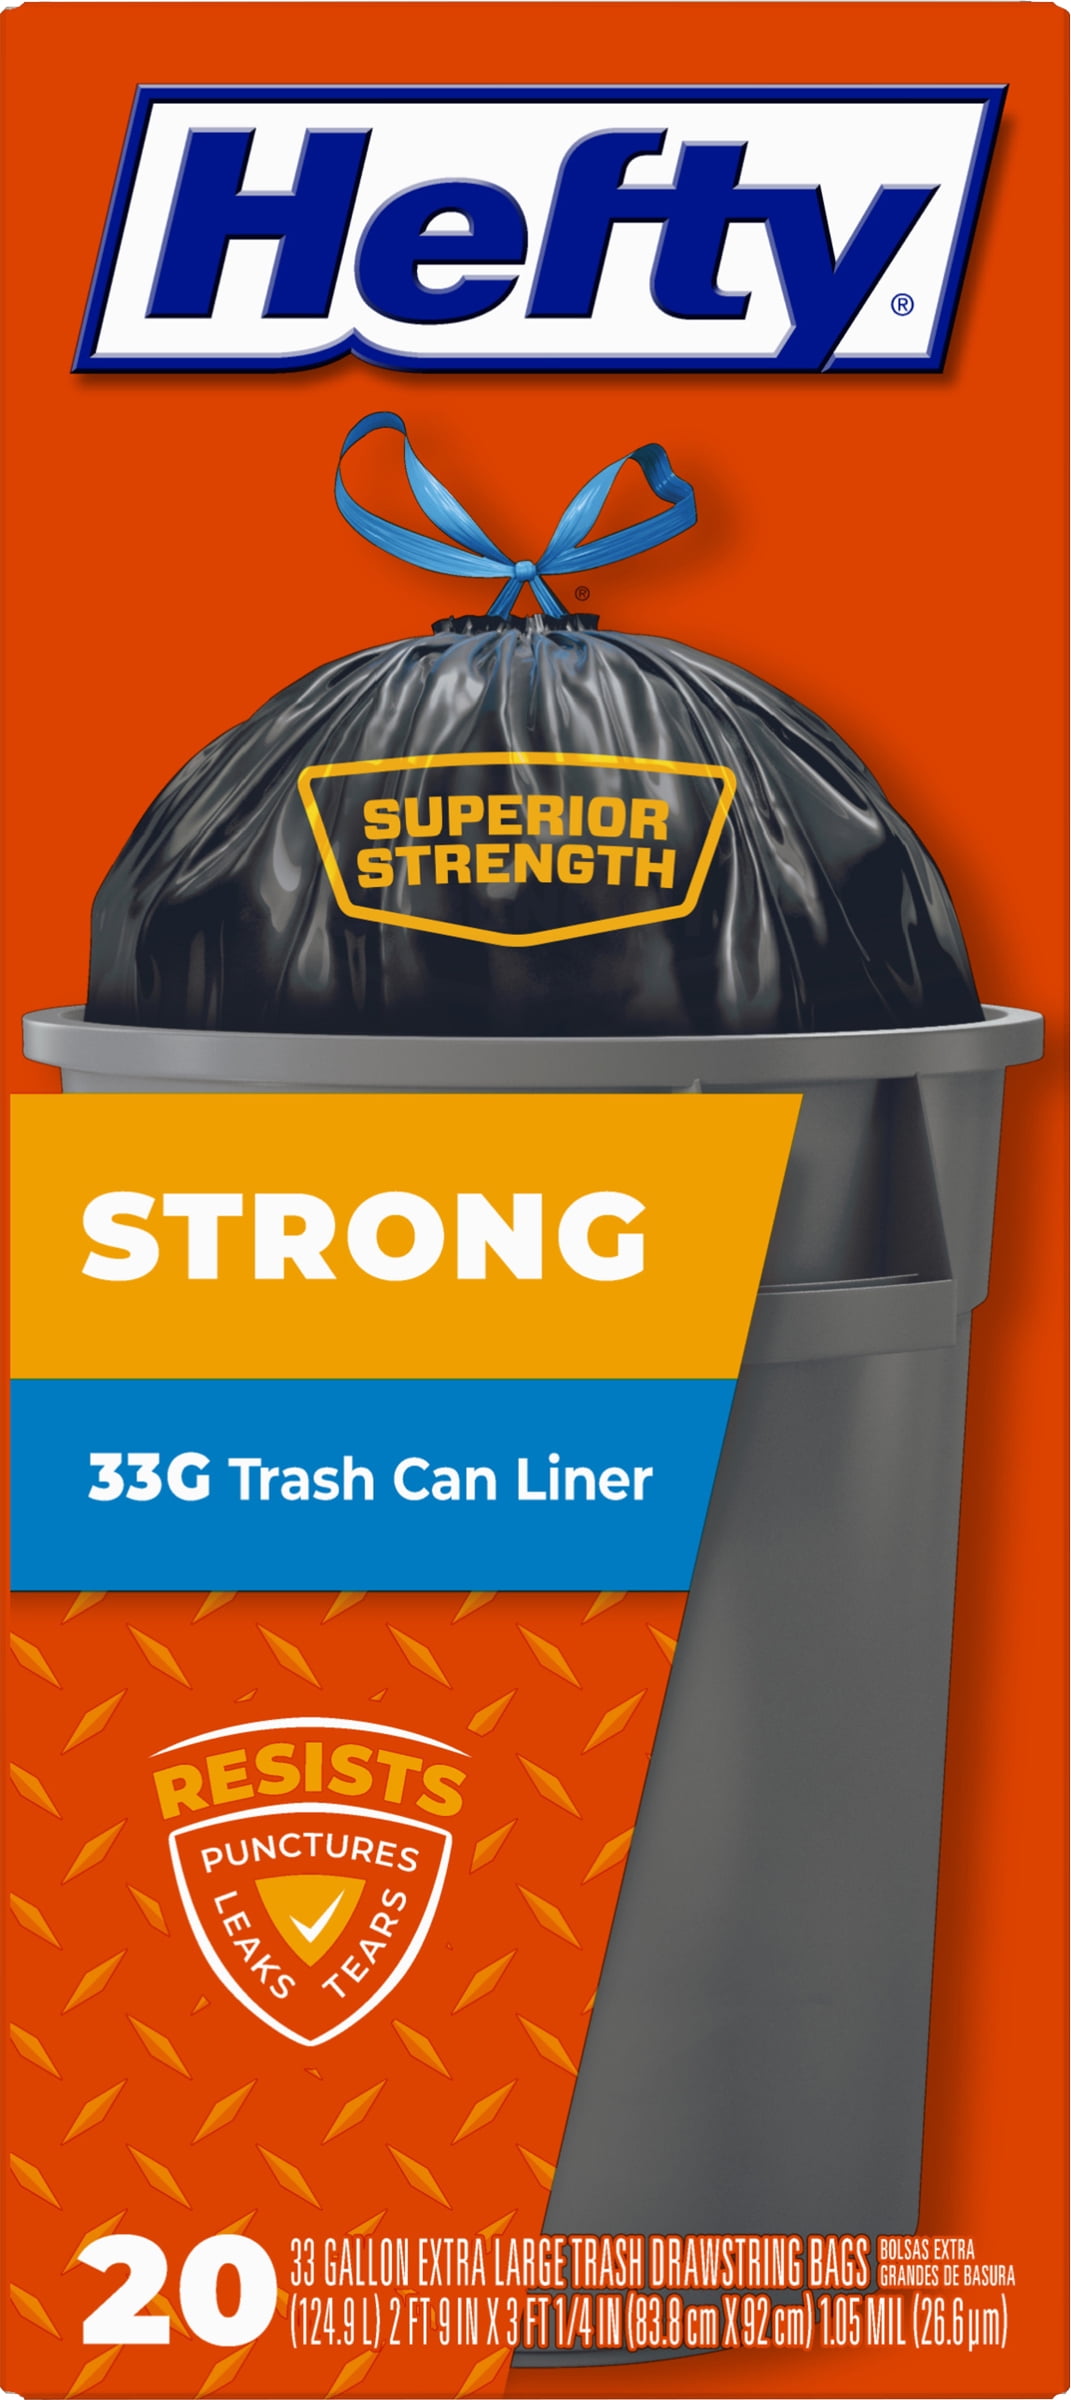 Hefty Drawstring Extra Strong Trash Bags, 30 Gallon - 56 count